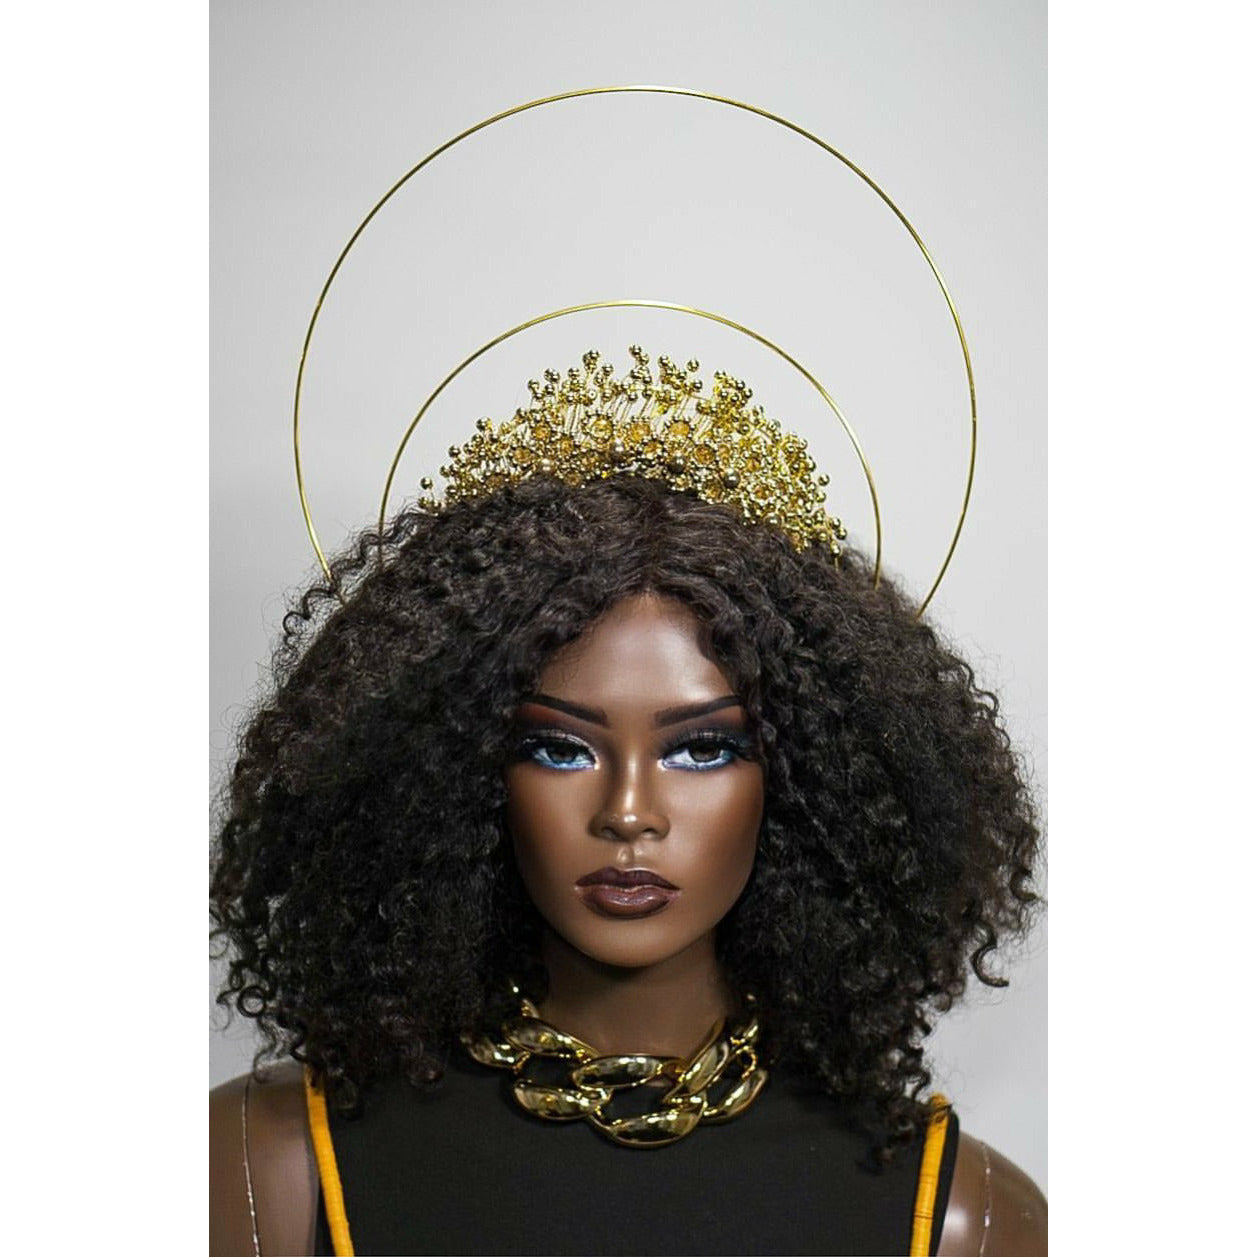 Nerri Gold headband/ crown